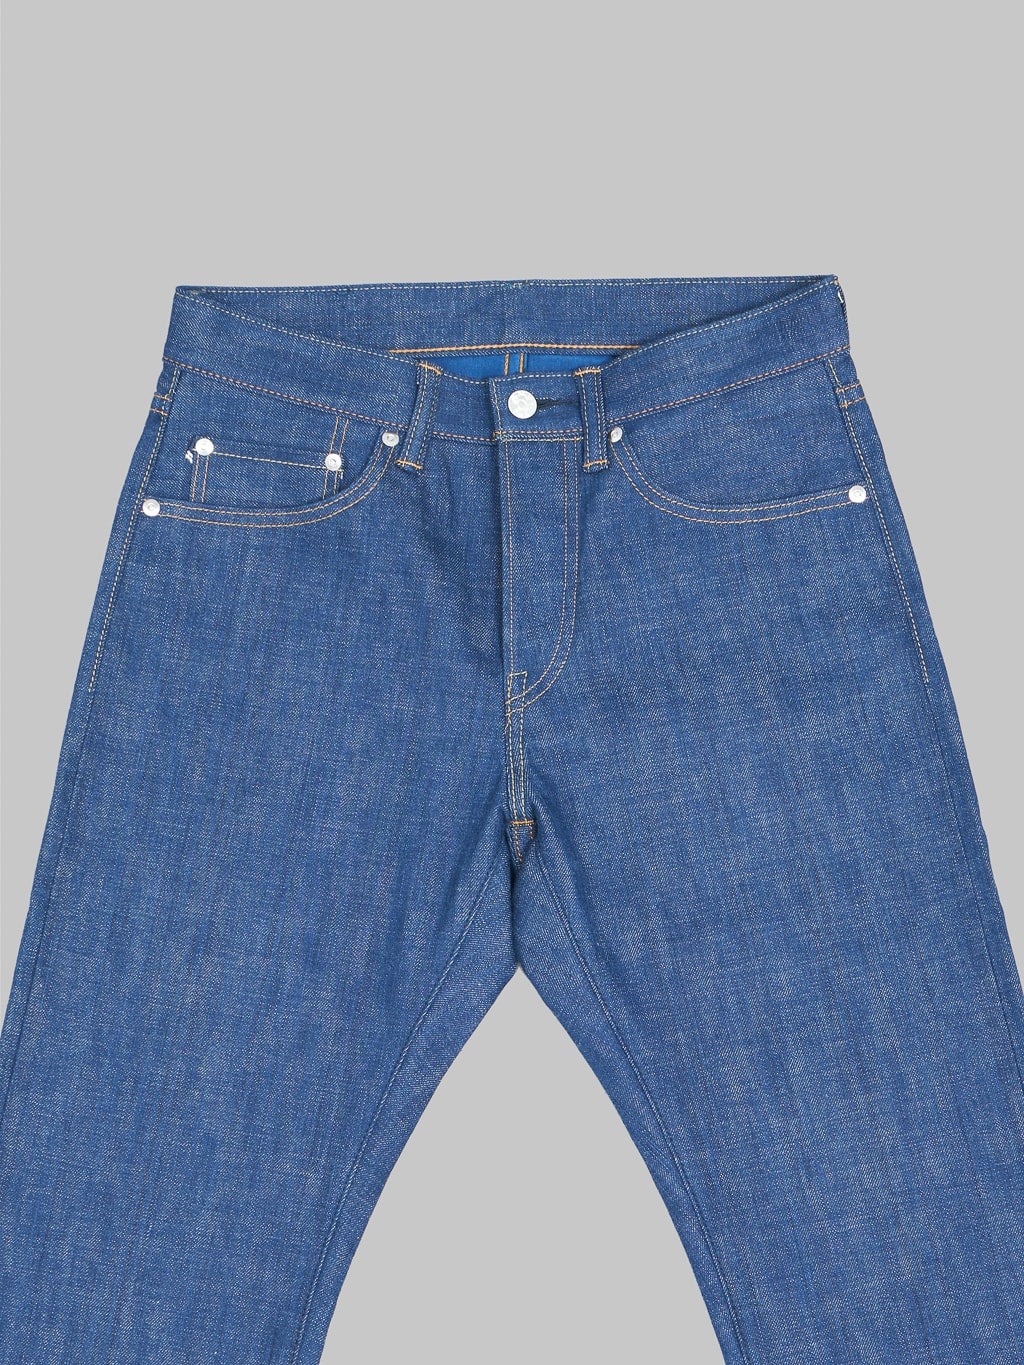 momotaro 0605 ai natural indigo dyed natural tapered denim jeans front details